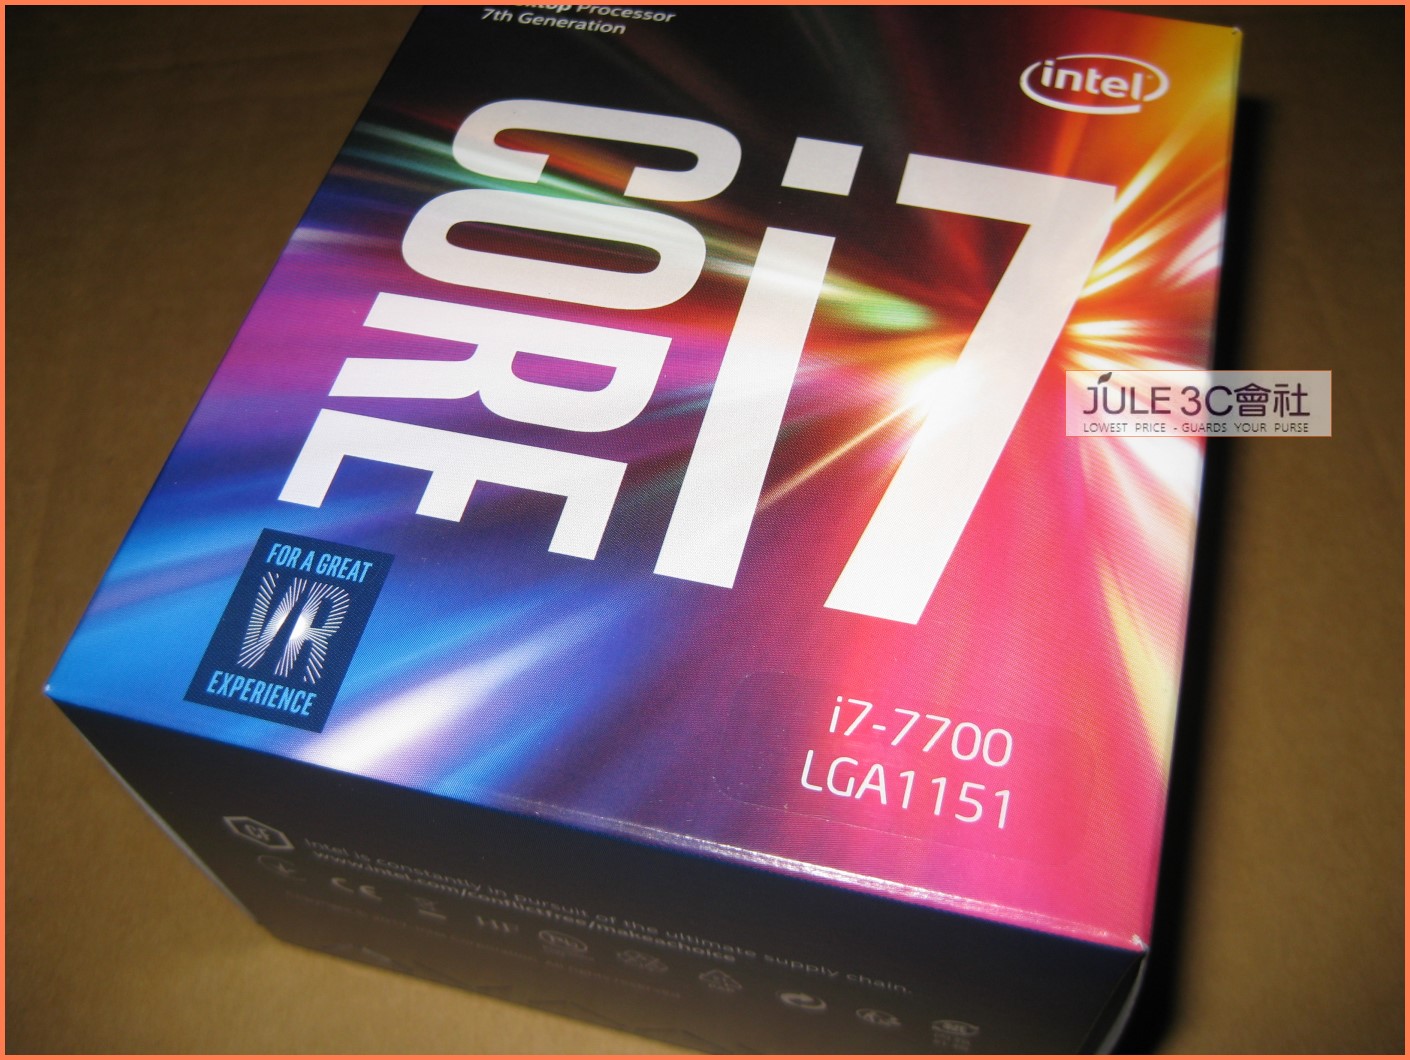 JULE 3C會社-Intel Core i7 7700 3.6G~4.2G/8M/盒裝良品/第七代/1151 CPU